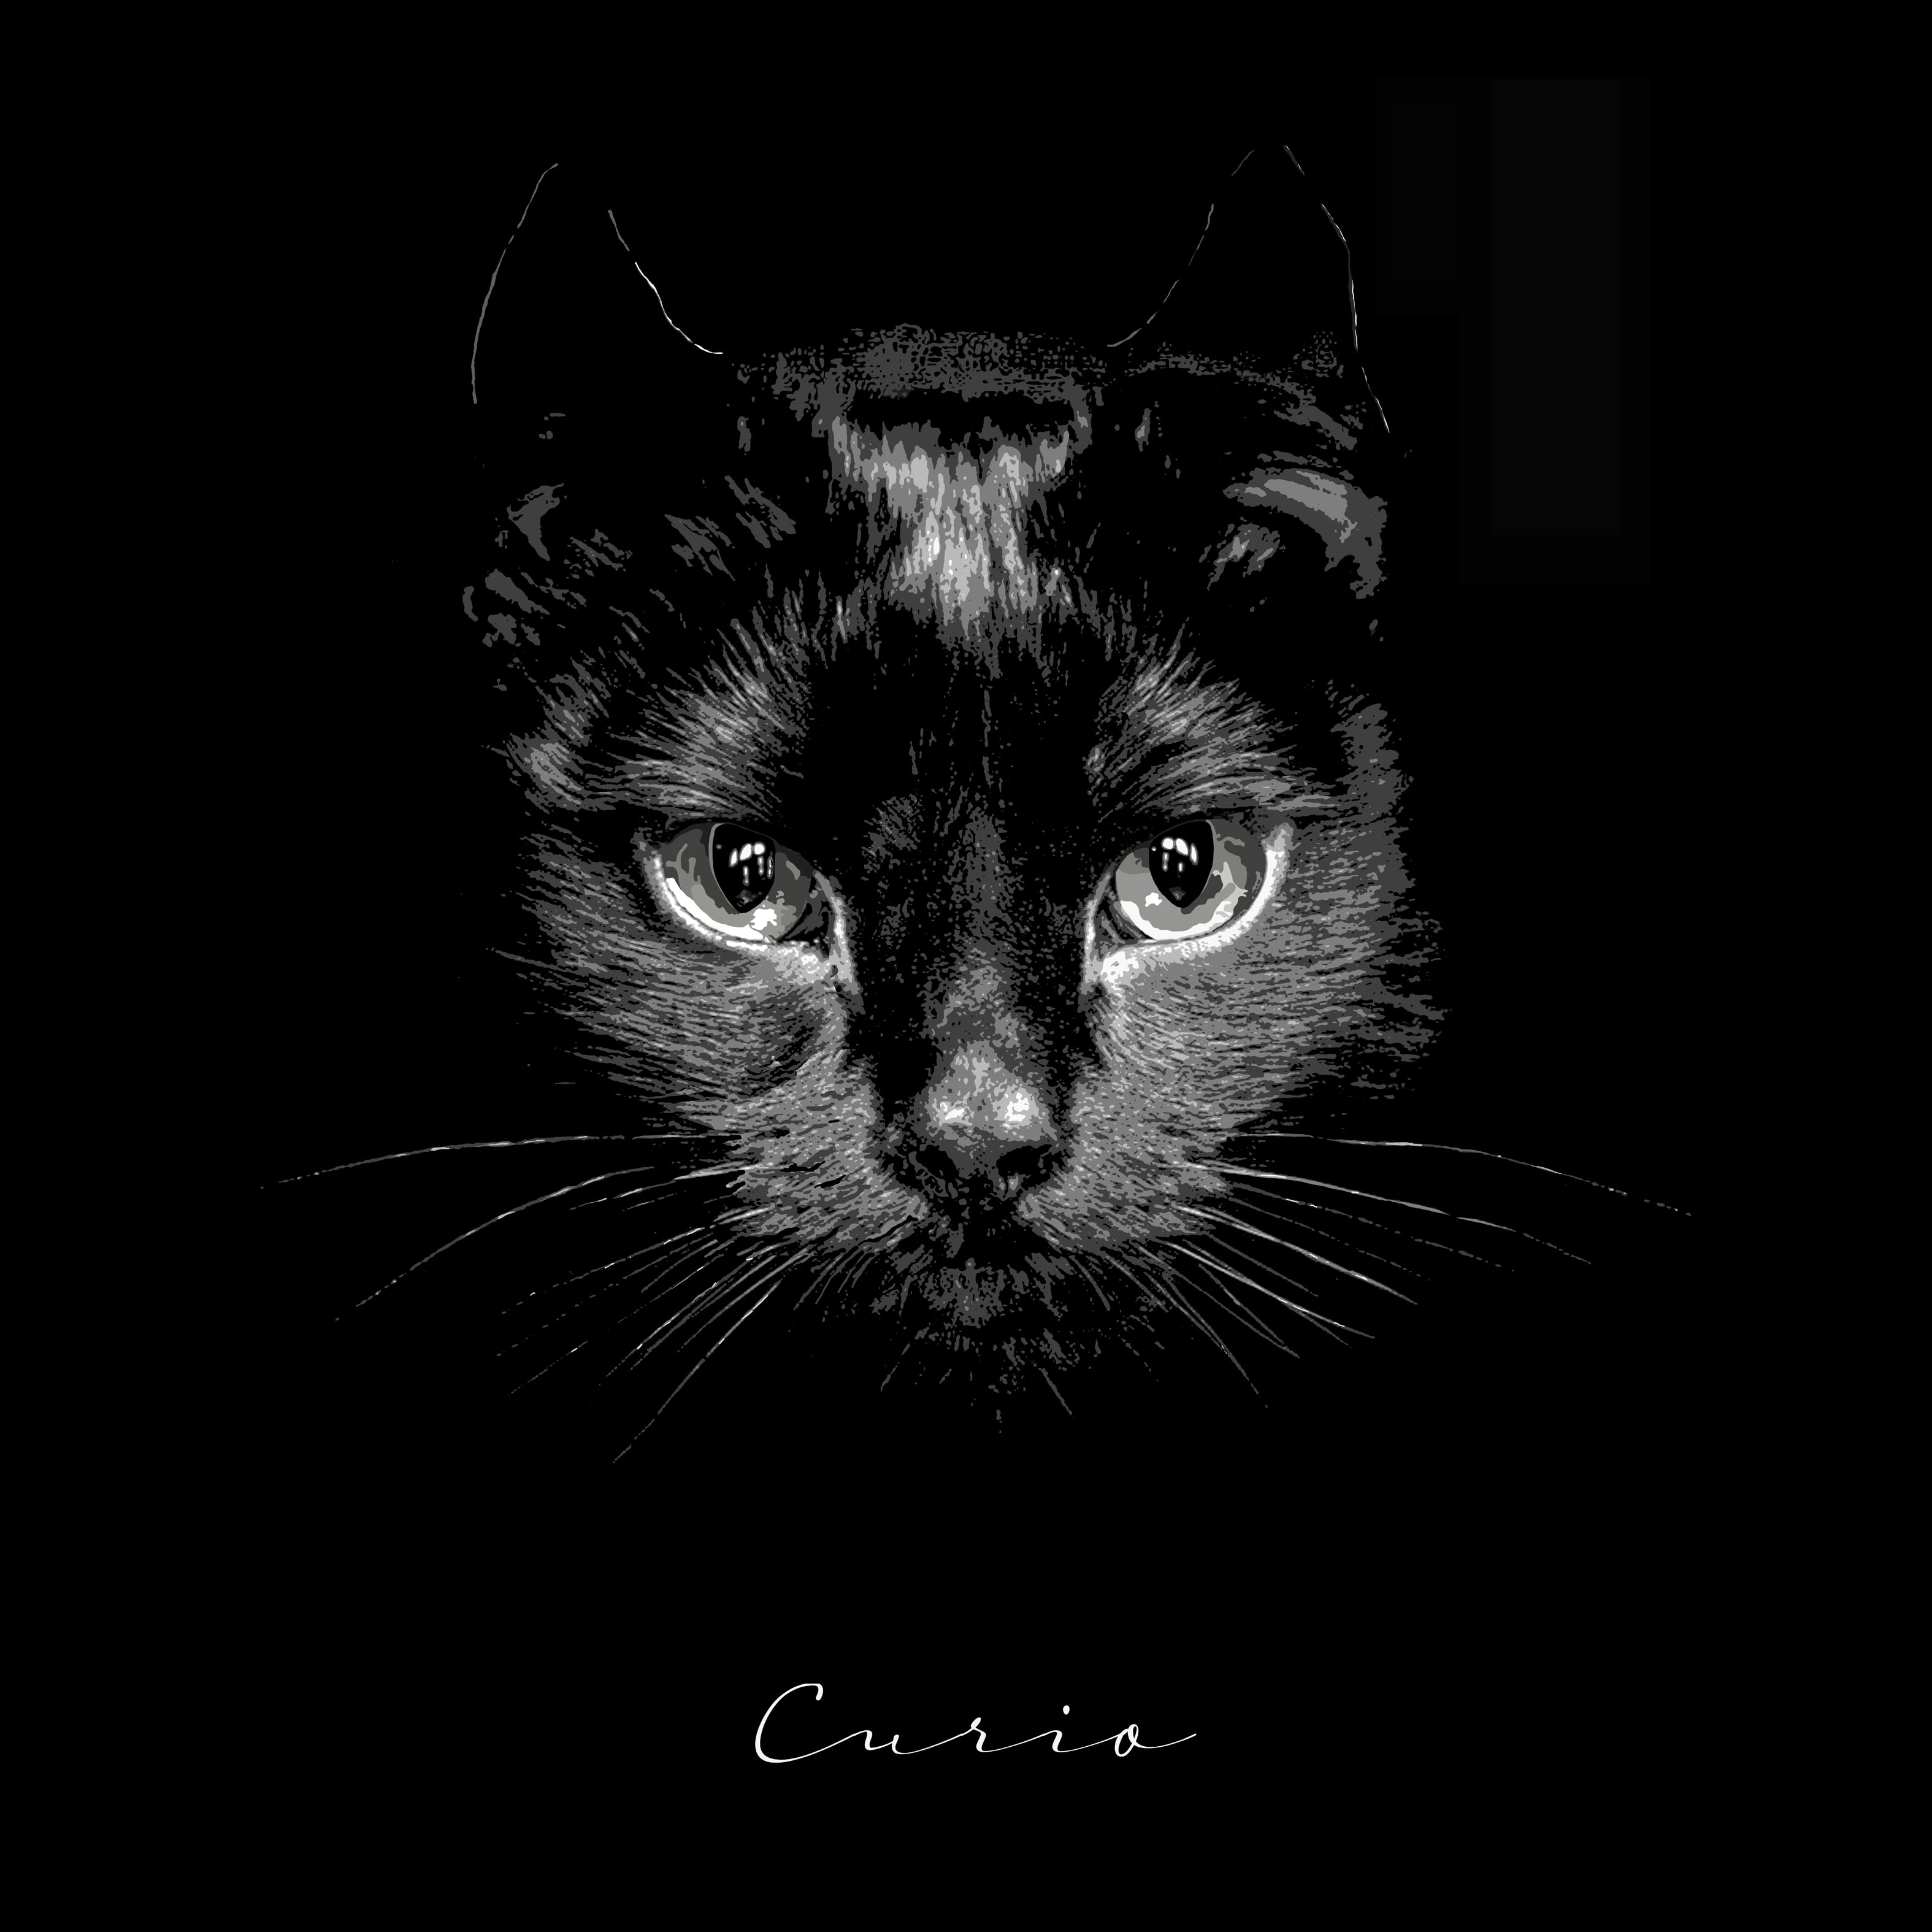 High Gloss on Aluminium, Black Cat with Signature Portrait treatment